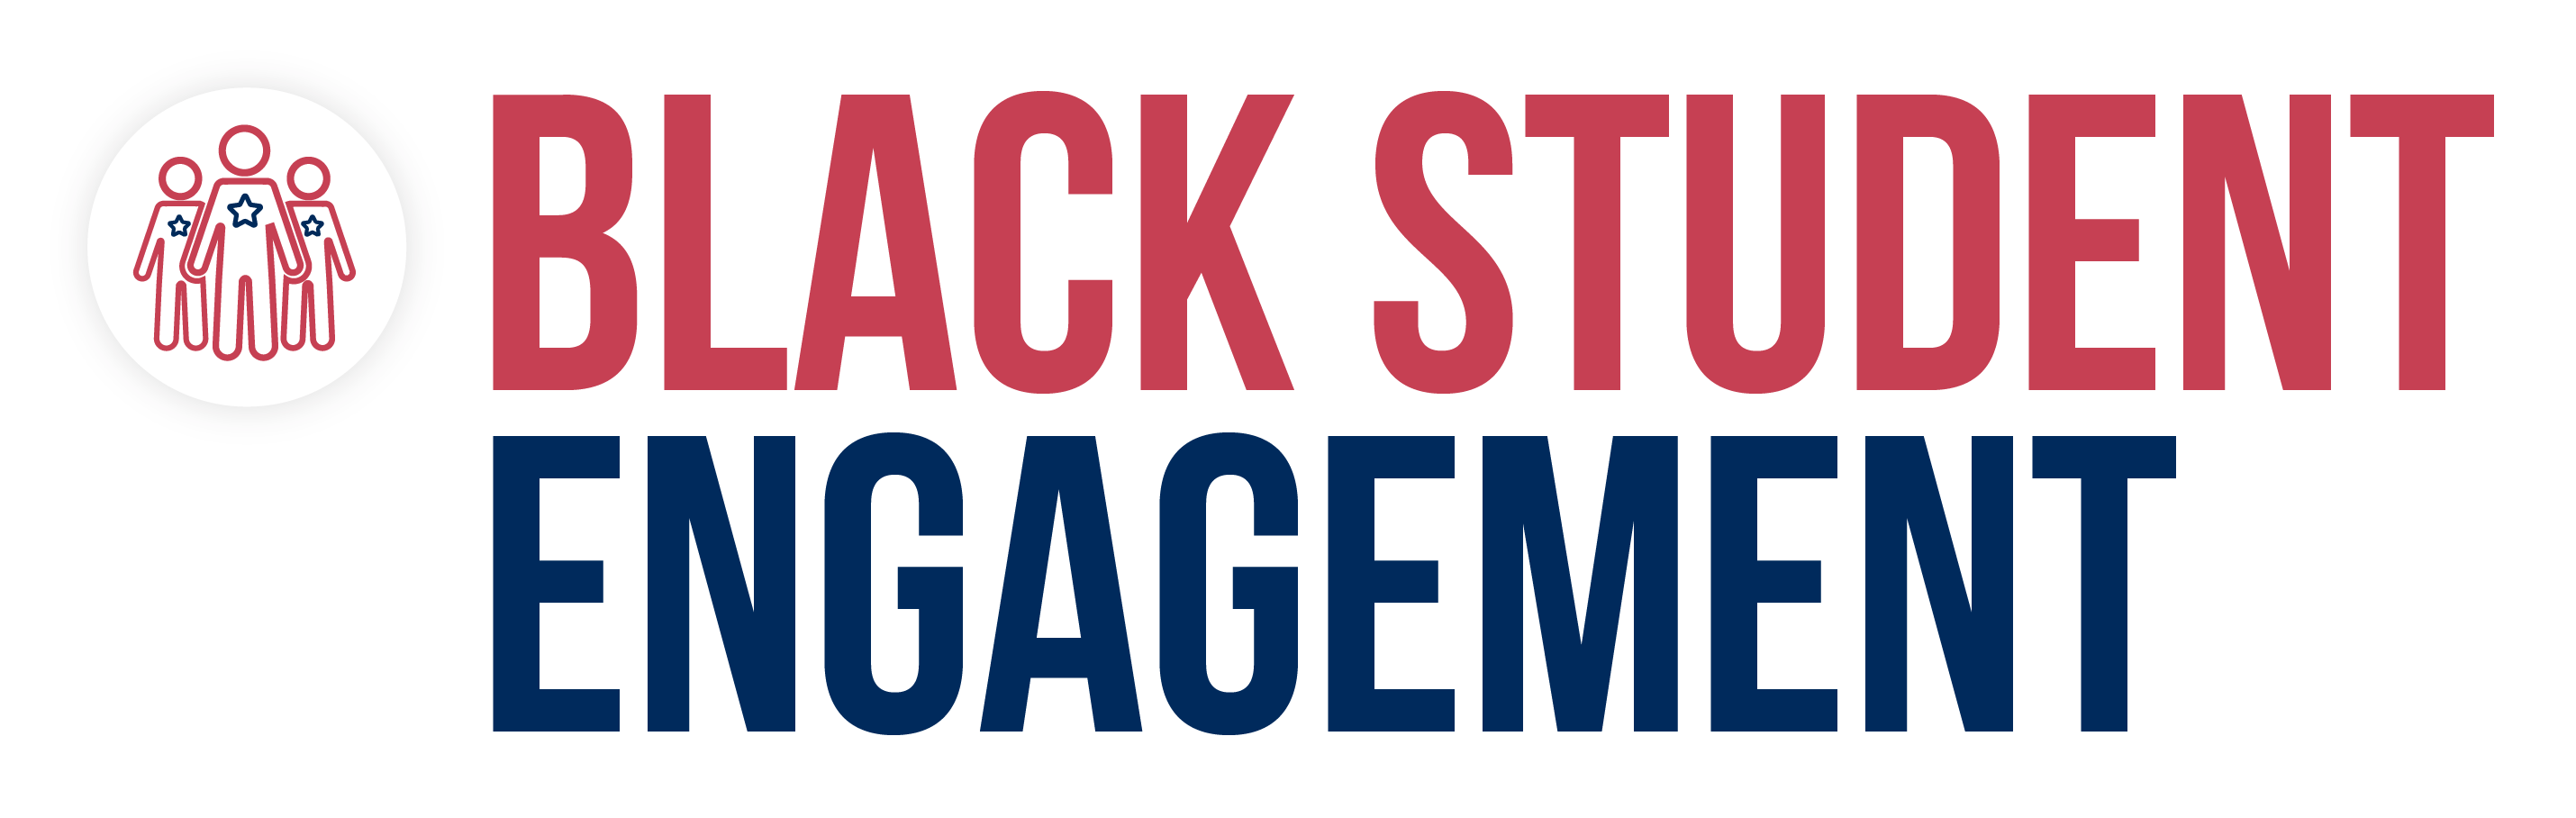 Black Student Engagement